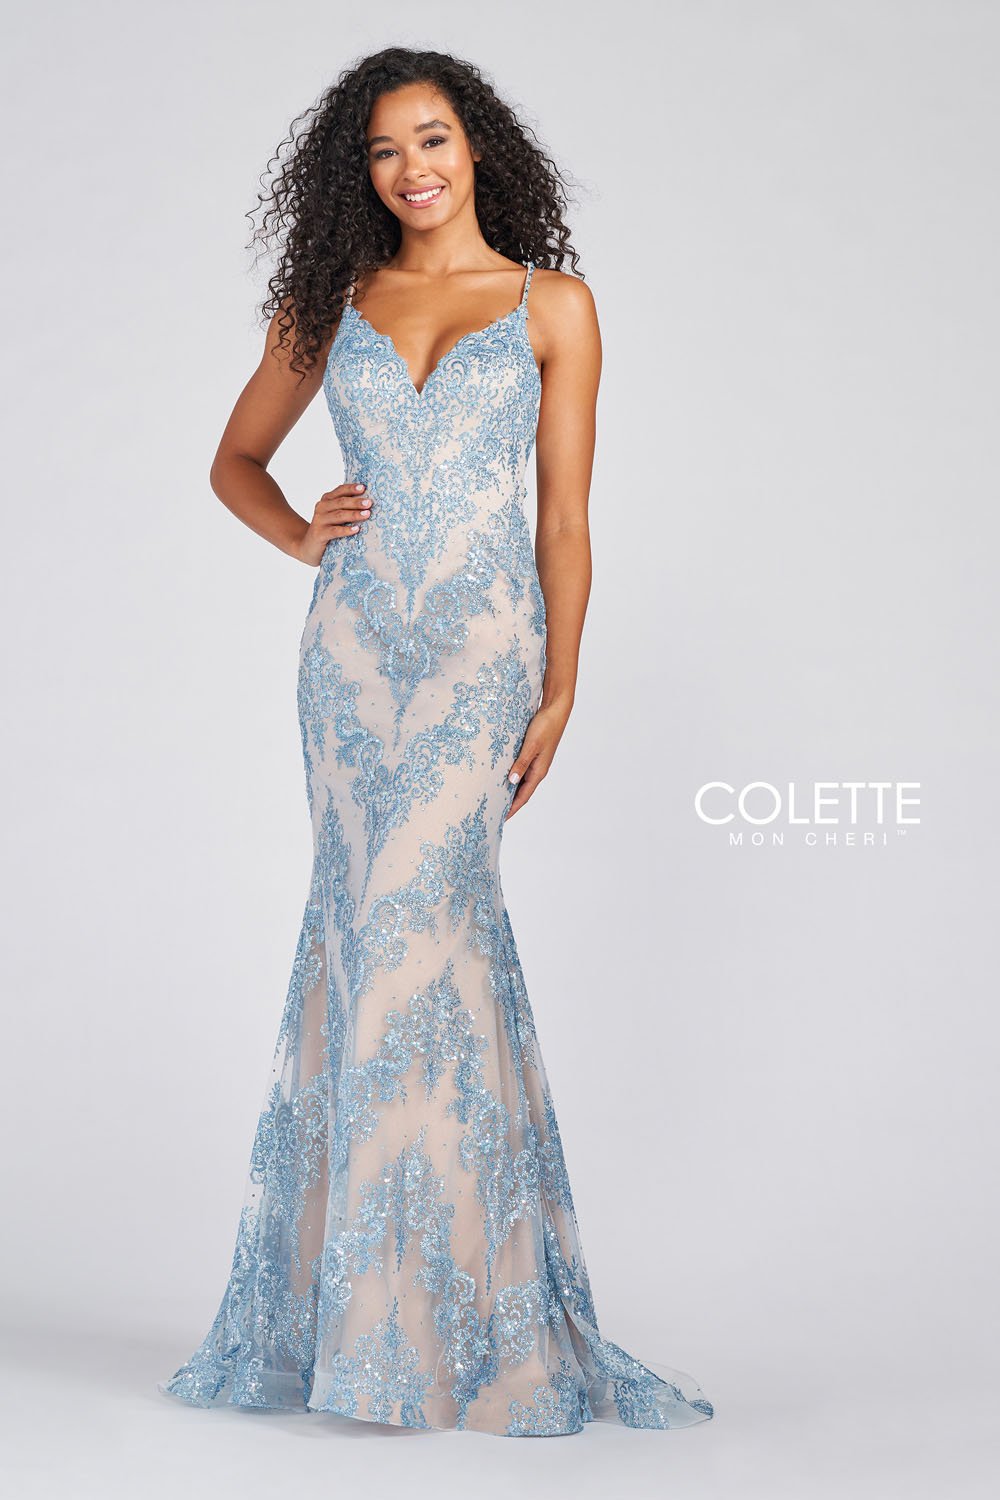 Colette CL12245 Light Blue Nude prom dresses.  Light Blue Nude prom dresses image by Colette.